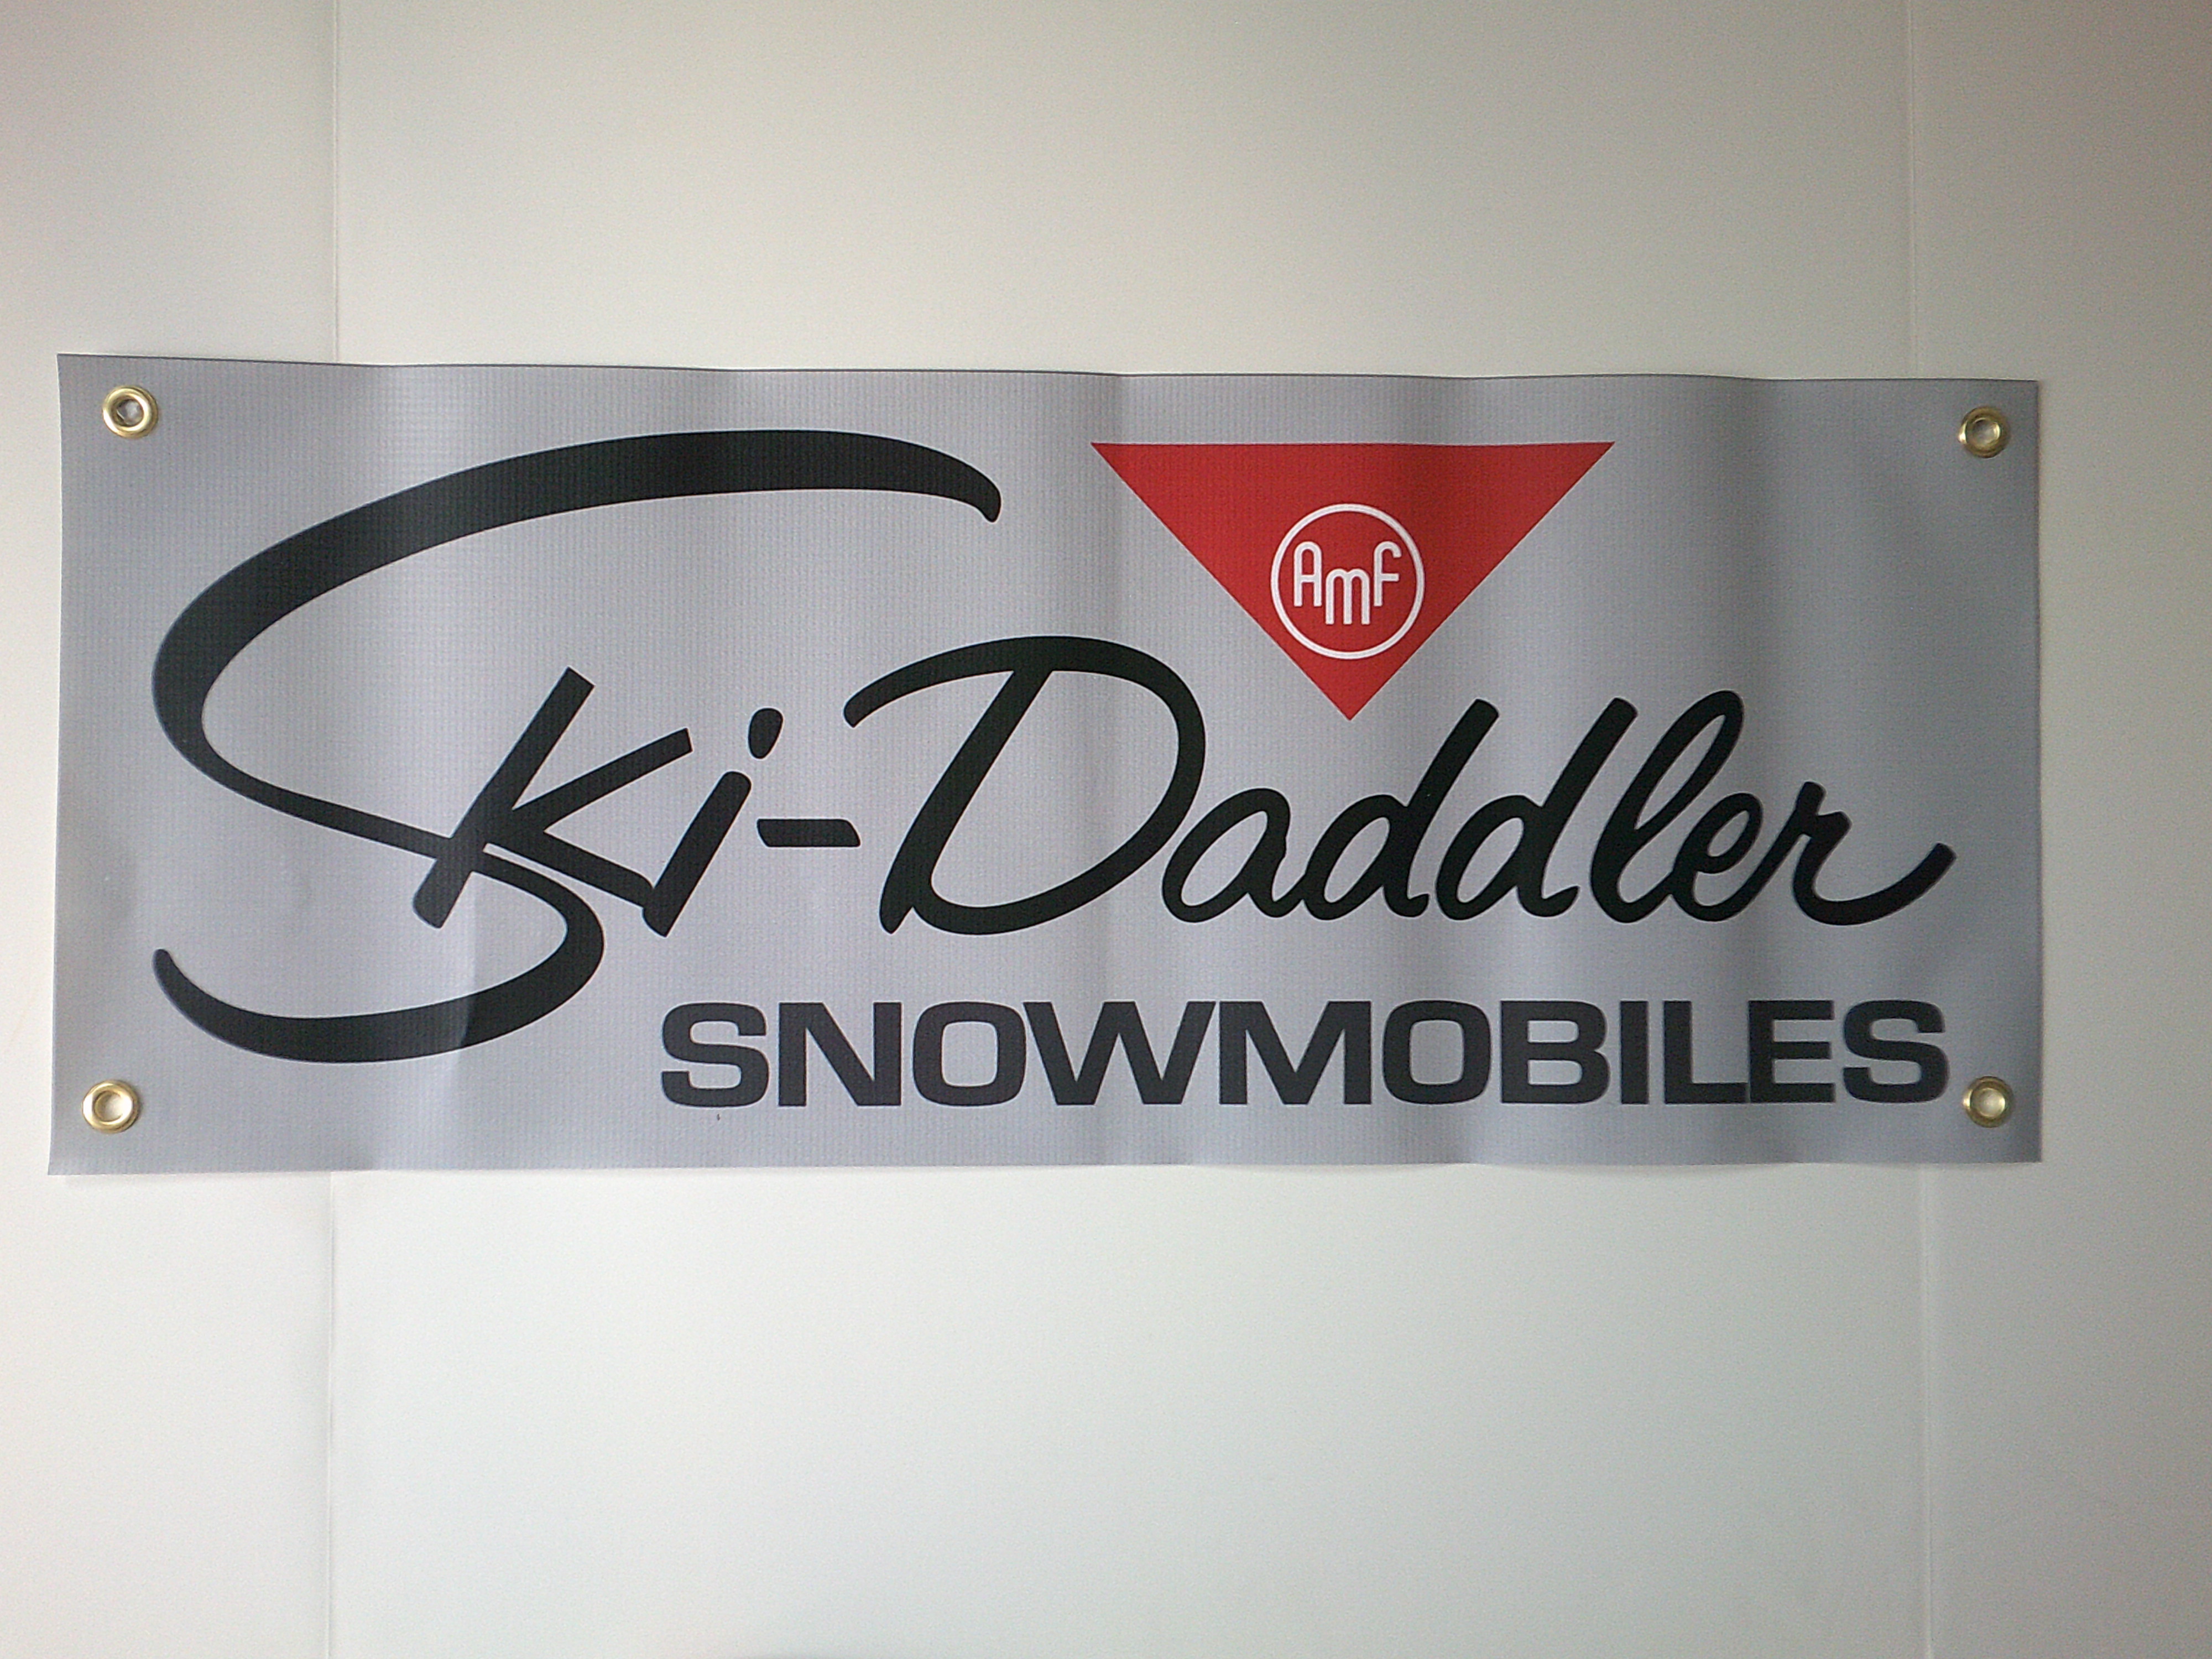 Ski-Daddler